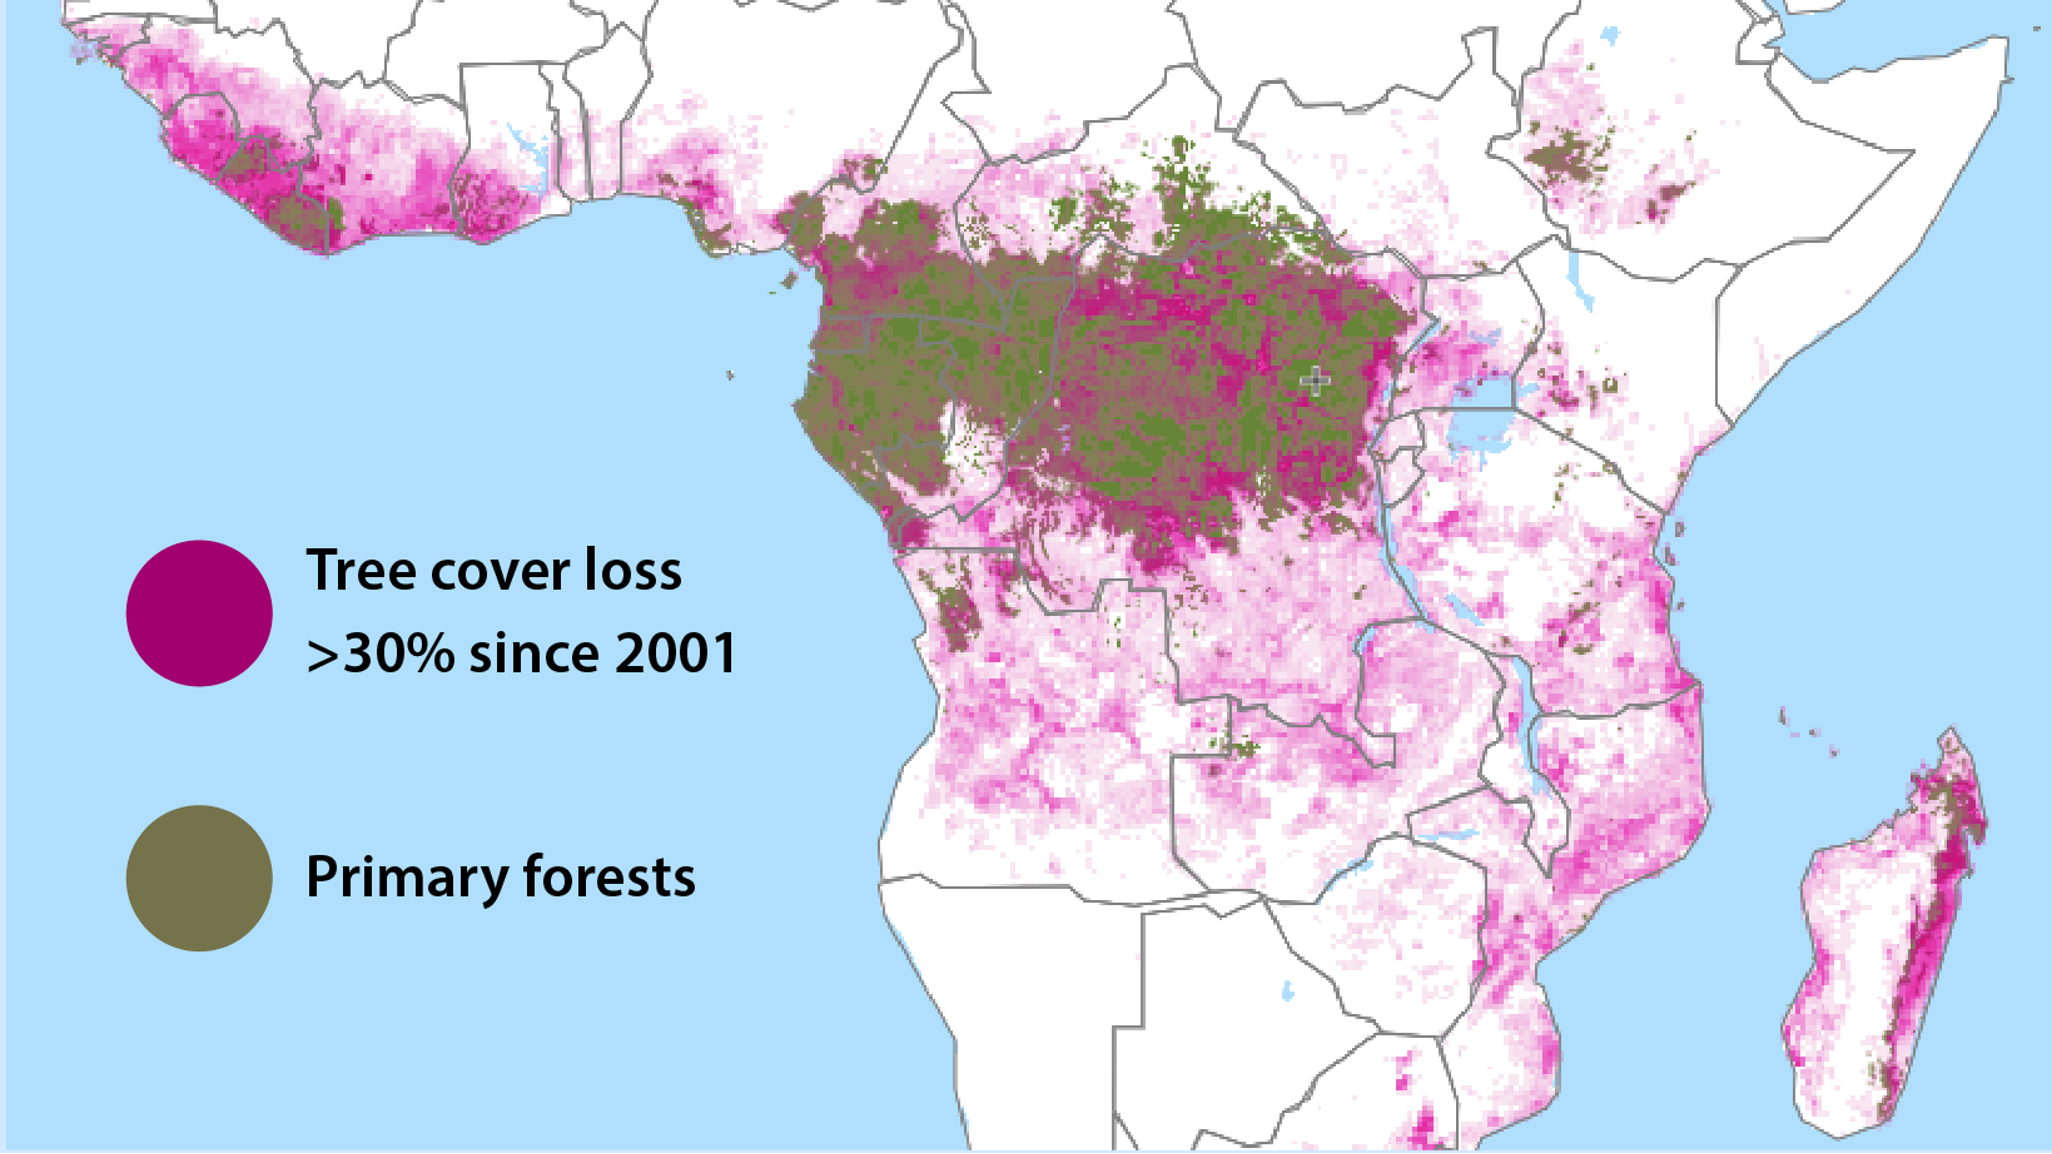 Congo Basin Forest Loss